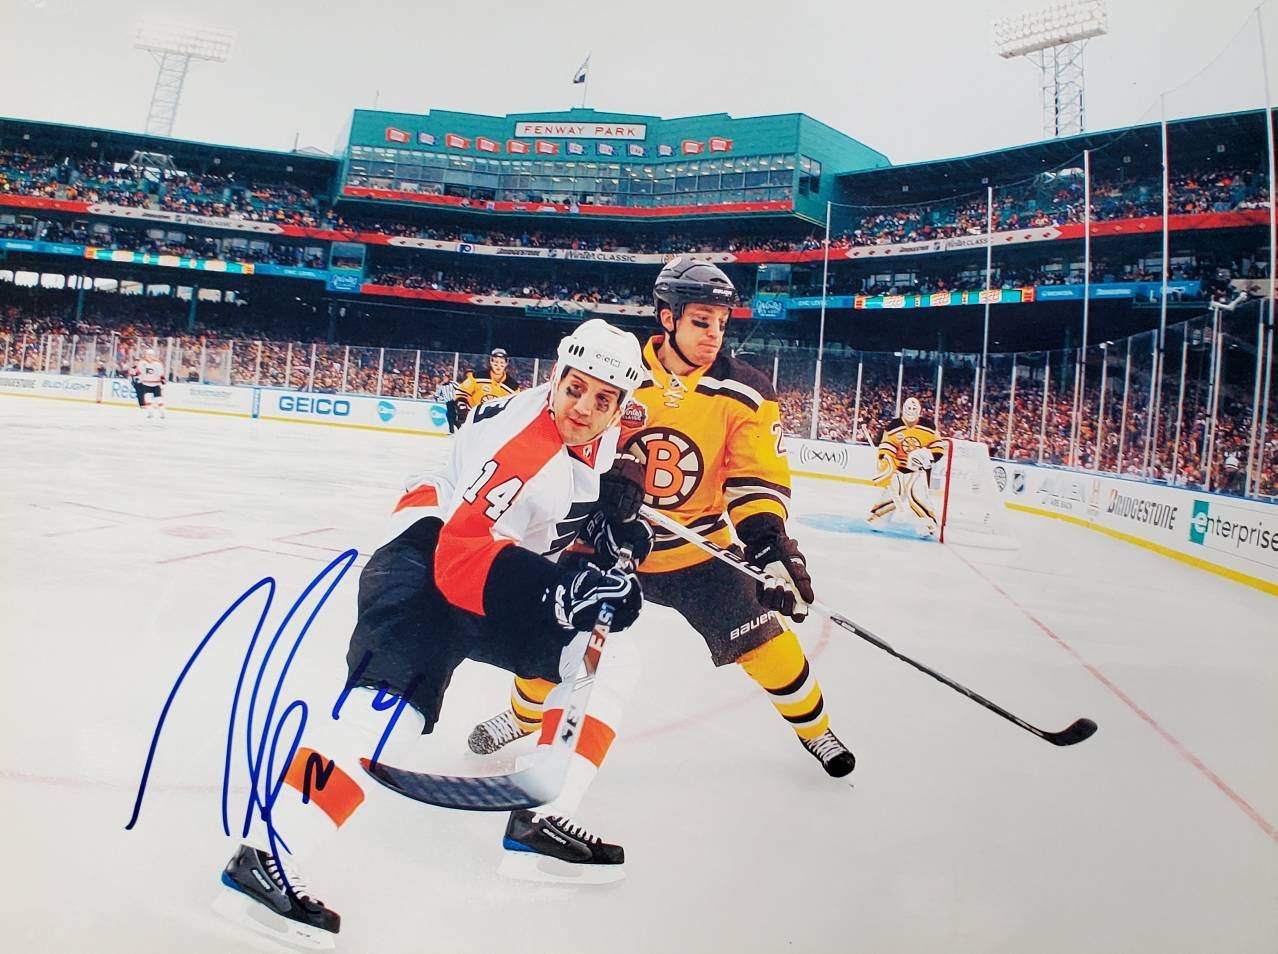 Ian Laperriere Autographed Signed Photo - Philadelphia Flyers - Autographs